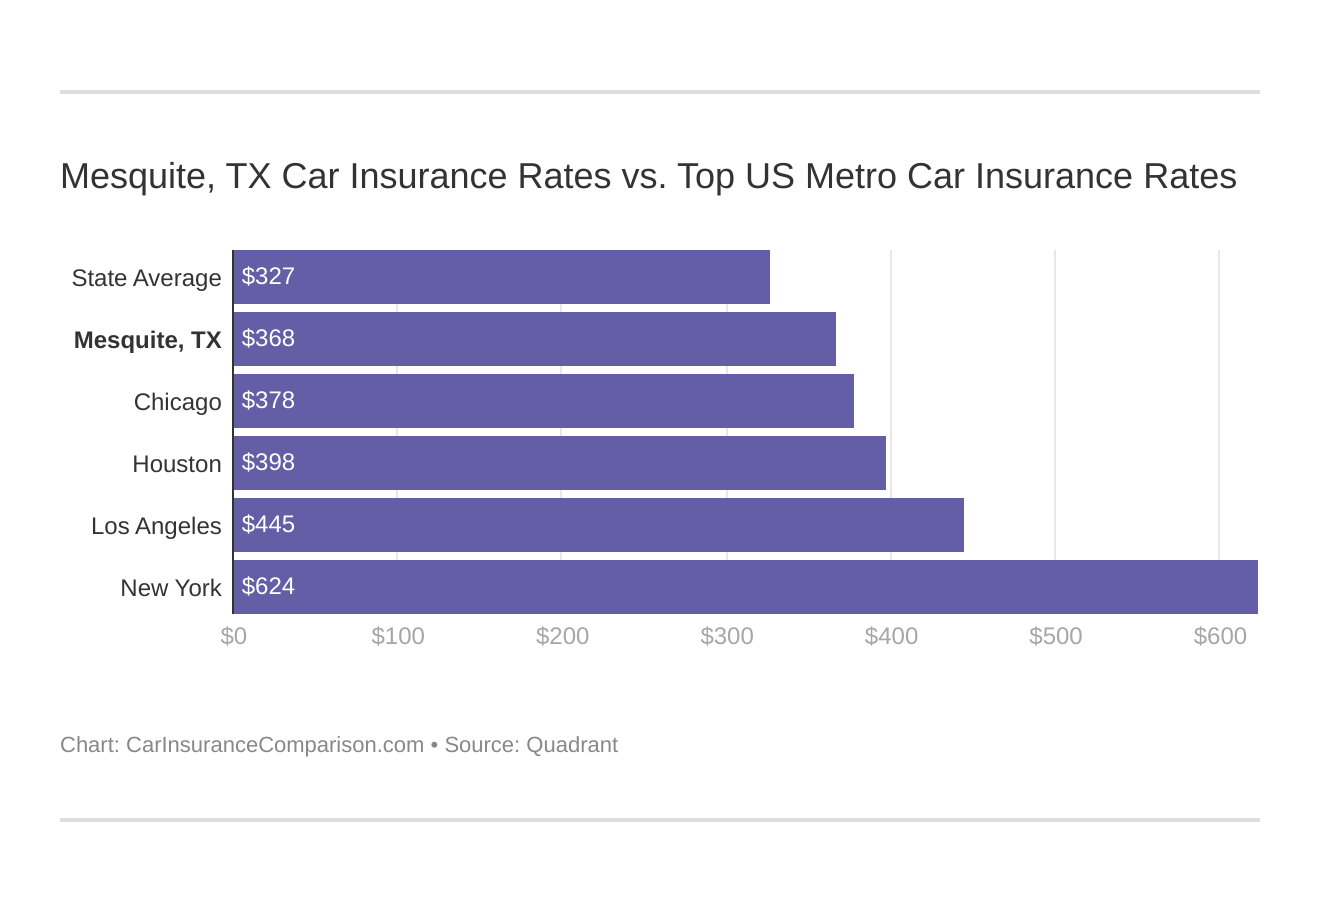 Mesquite, TX Car Insurance Rates vs. Top US Metro Car Insurance Rates